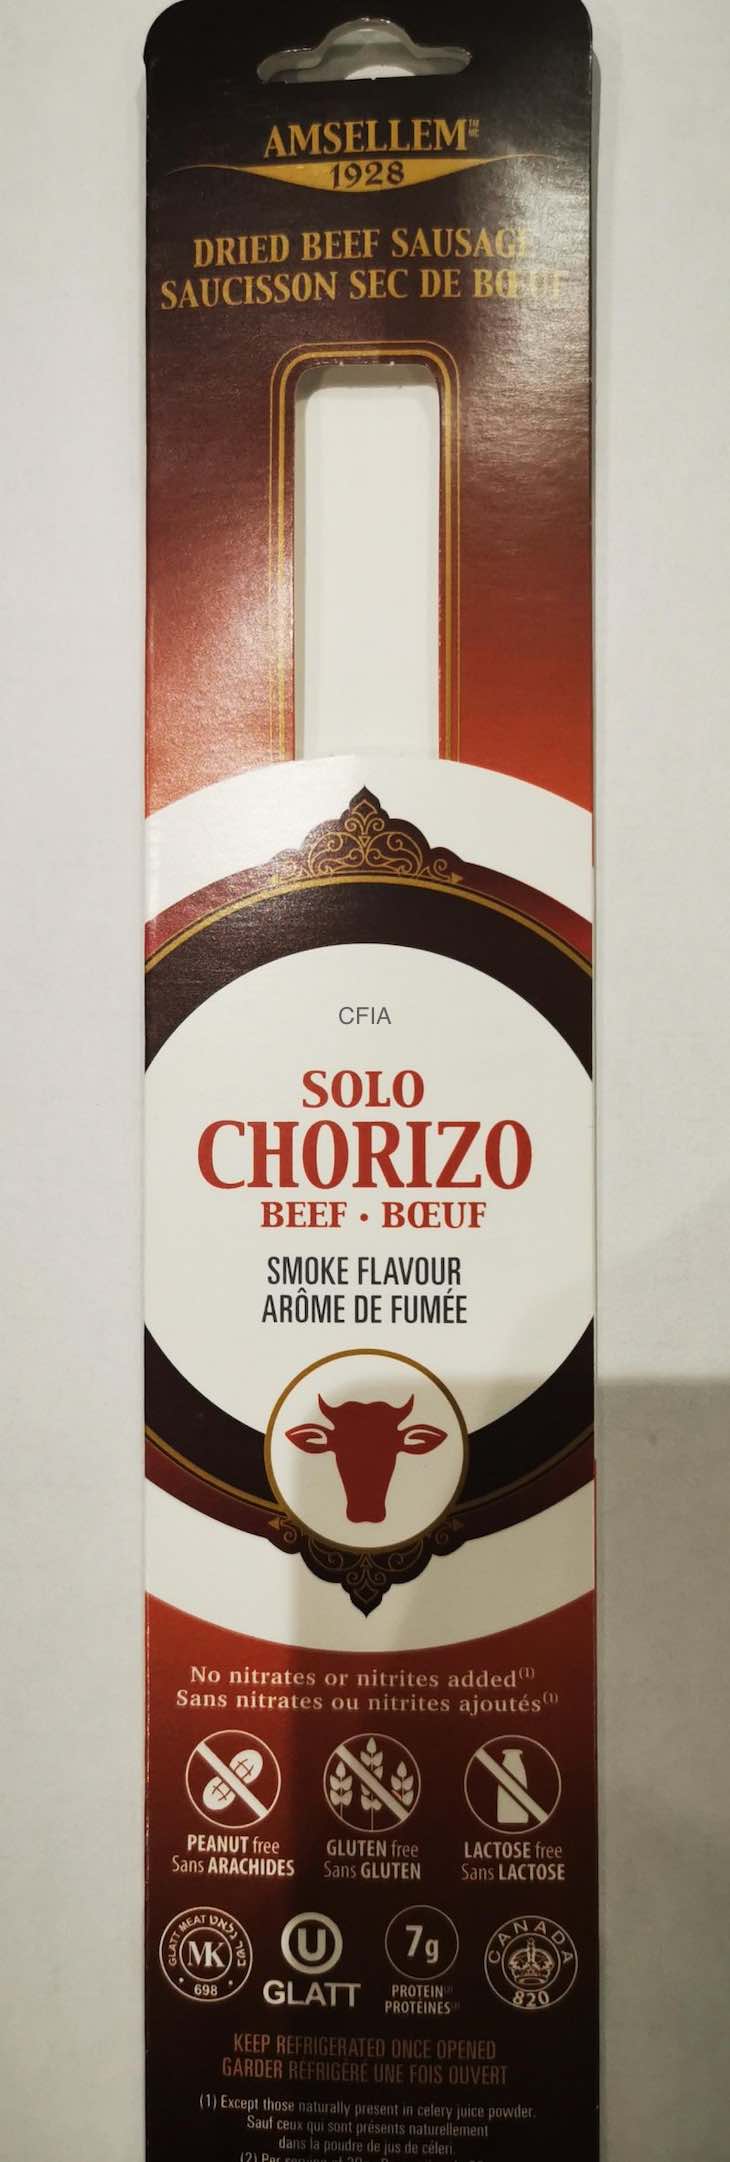 Amsellem Solo Chorizo Recalled For Possible Salmonella